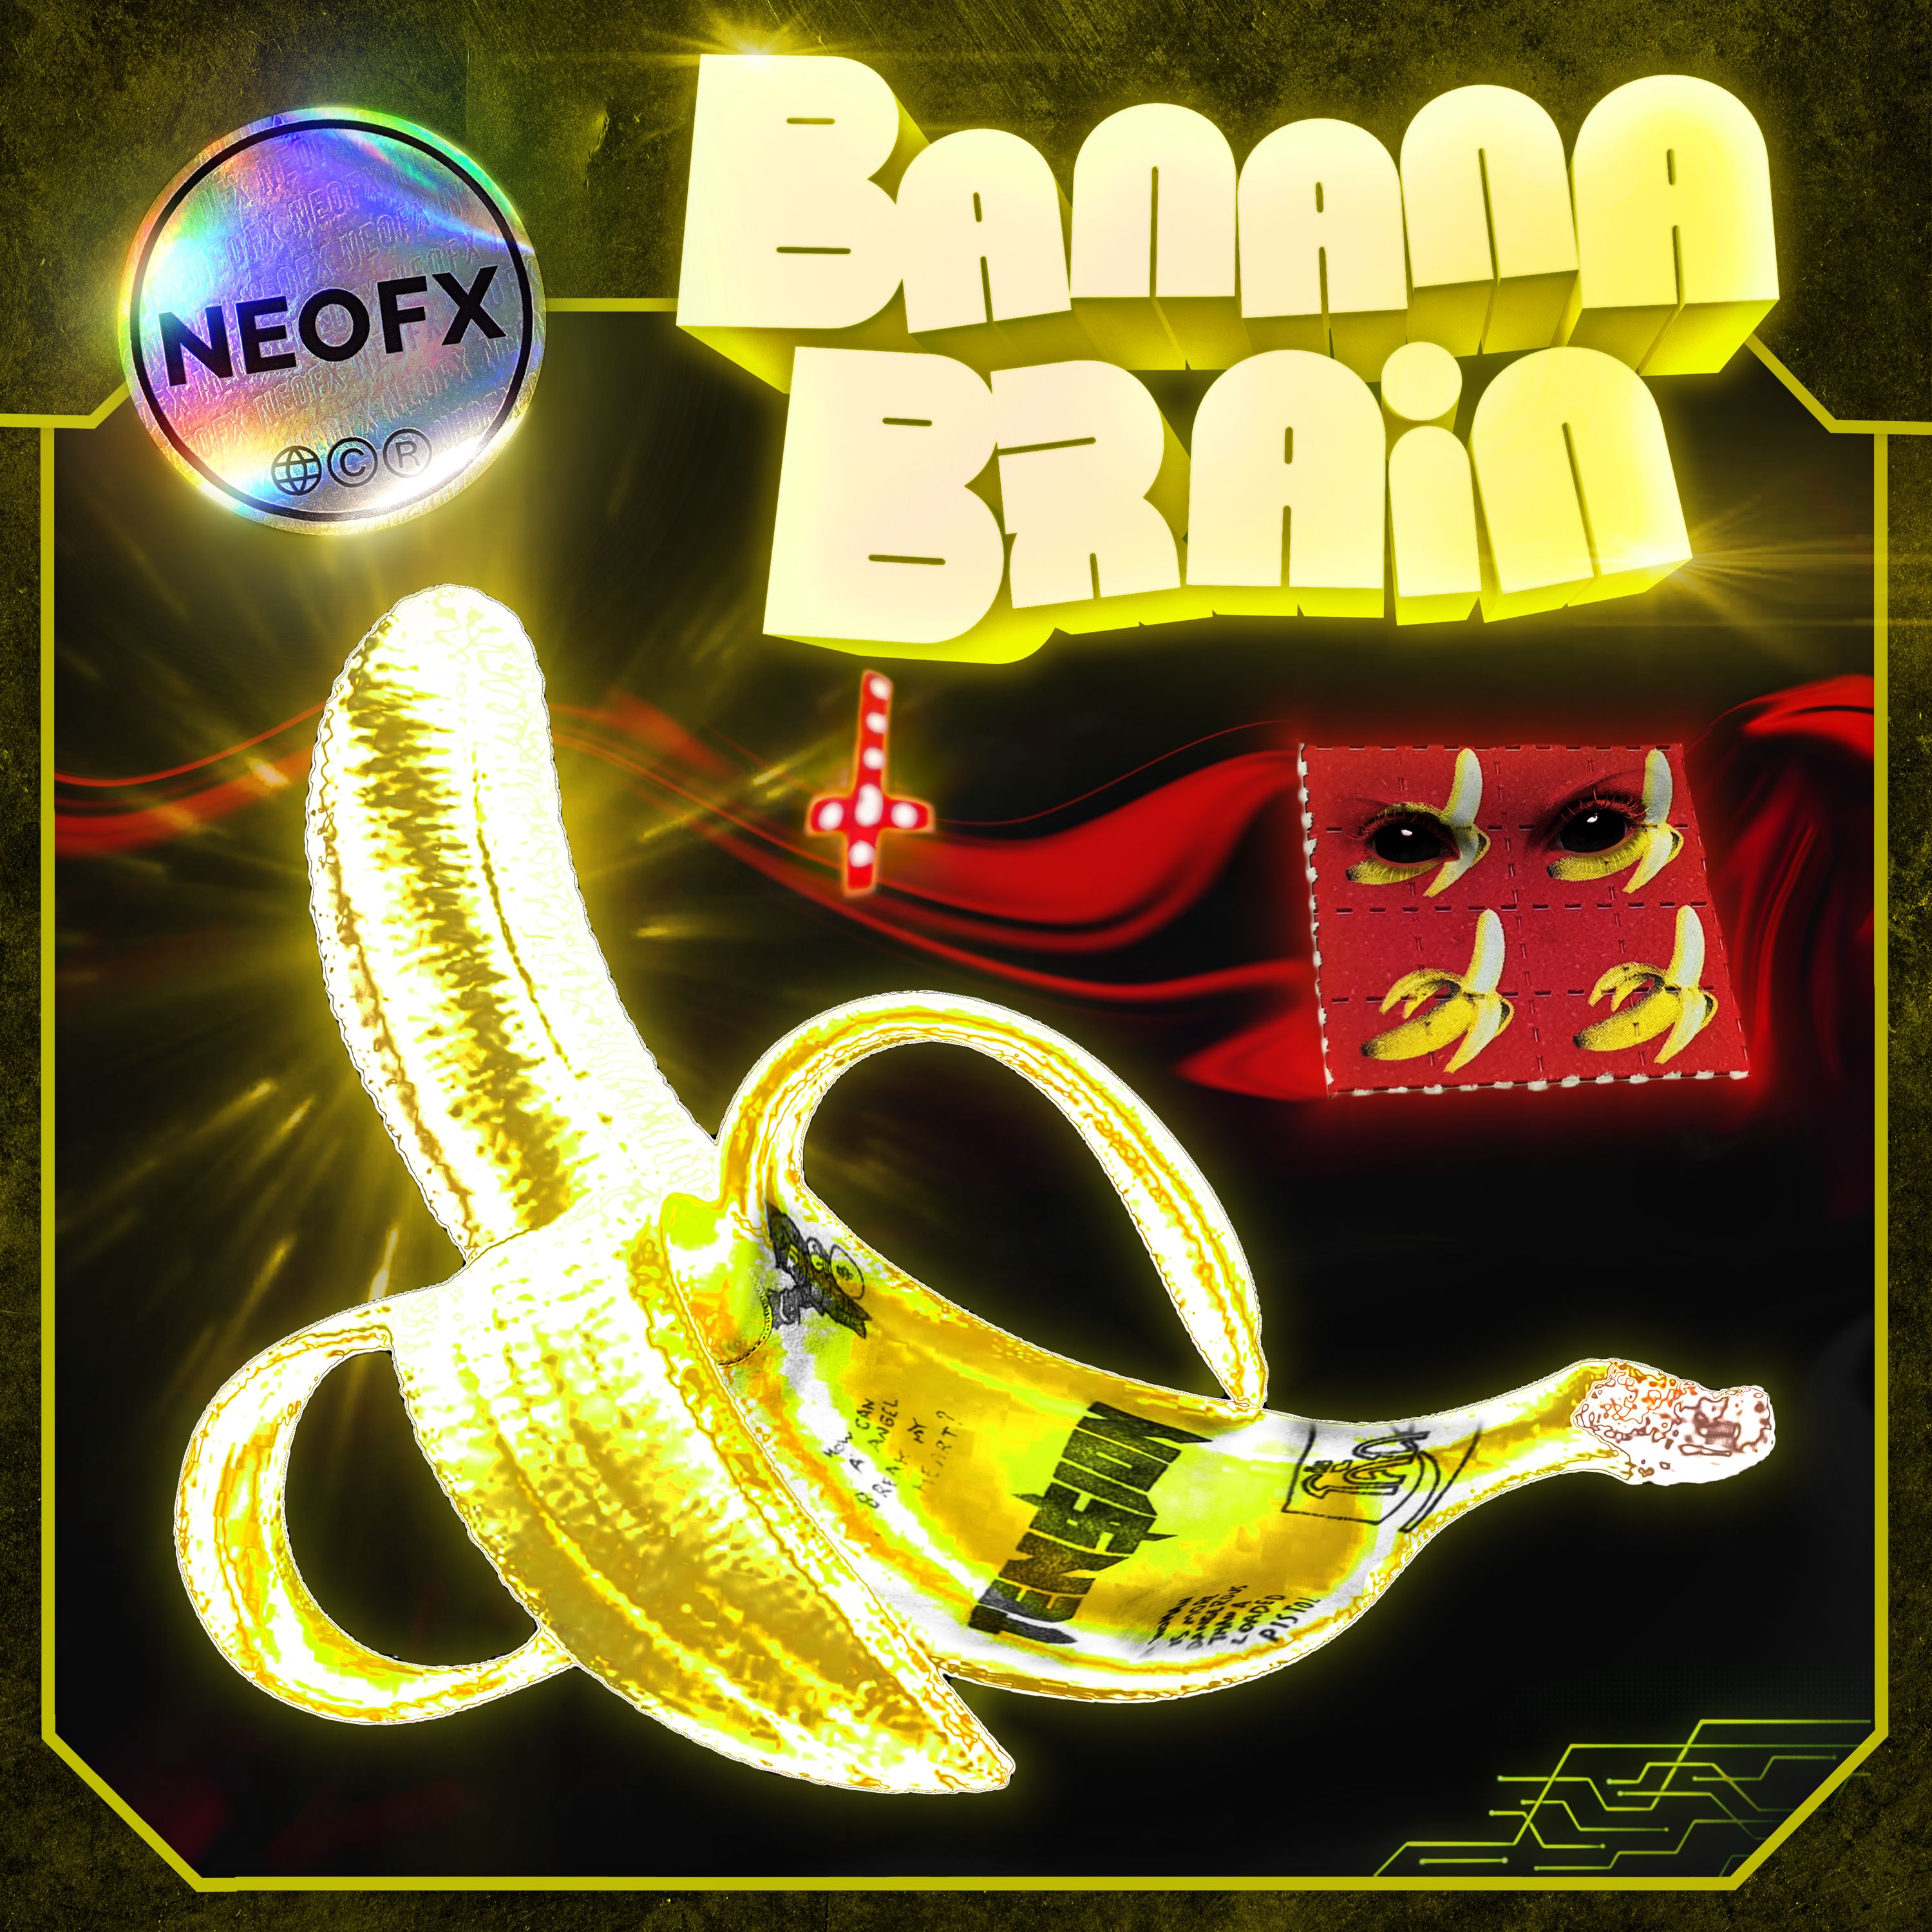 डाउनलोड करा Banana Brain